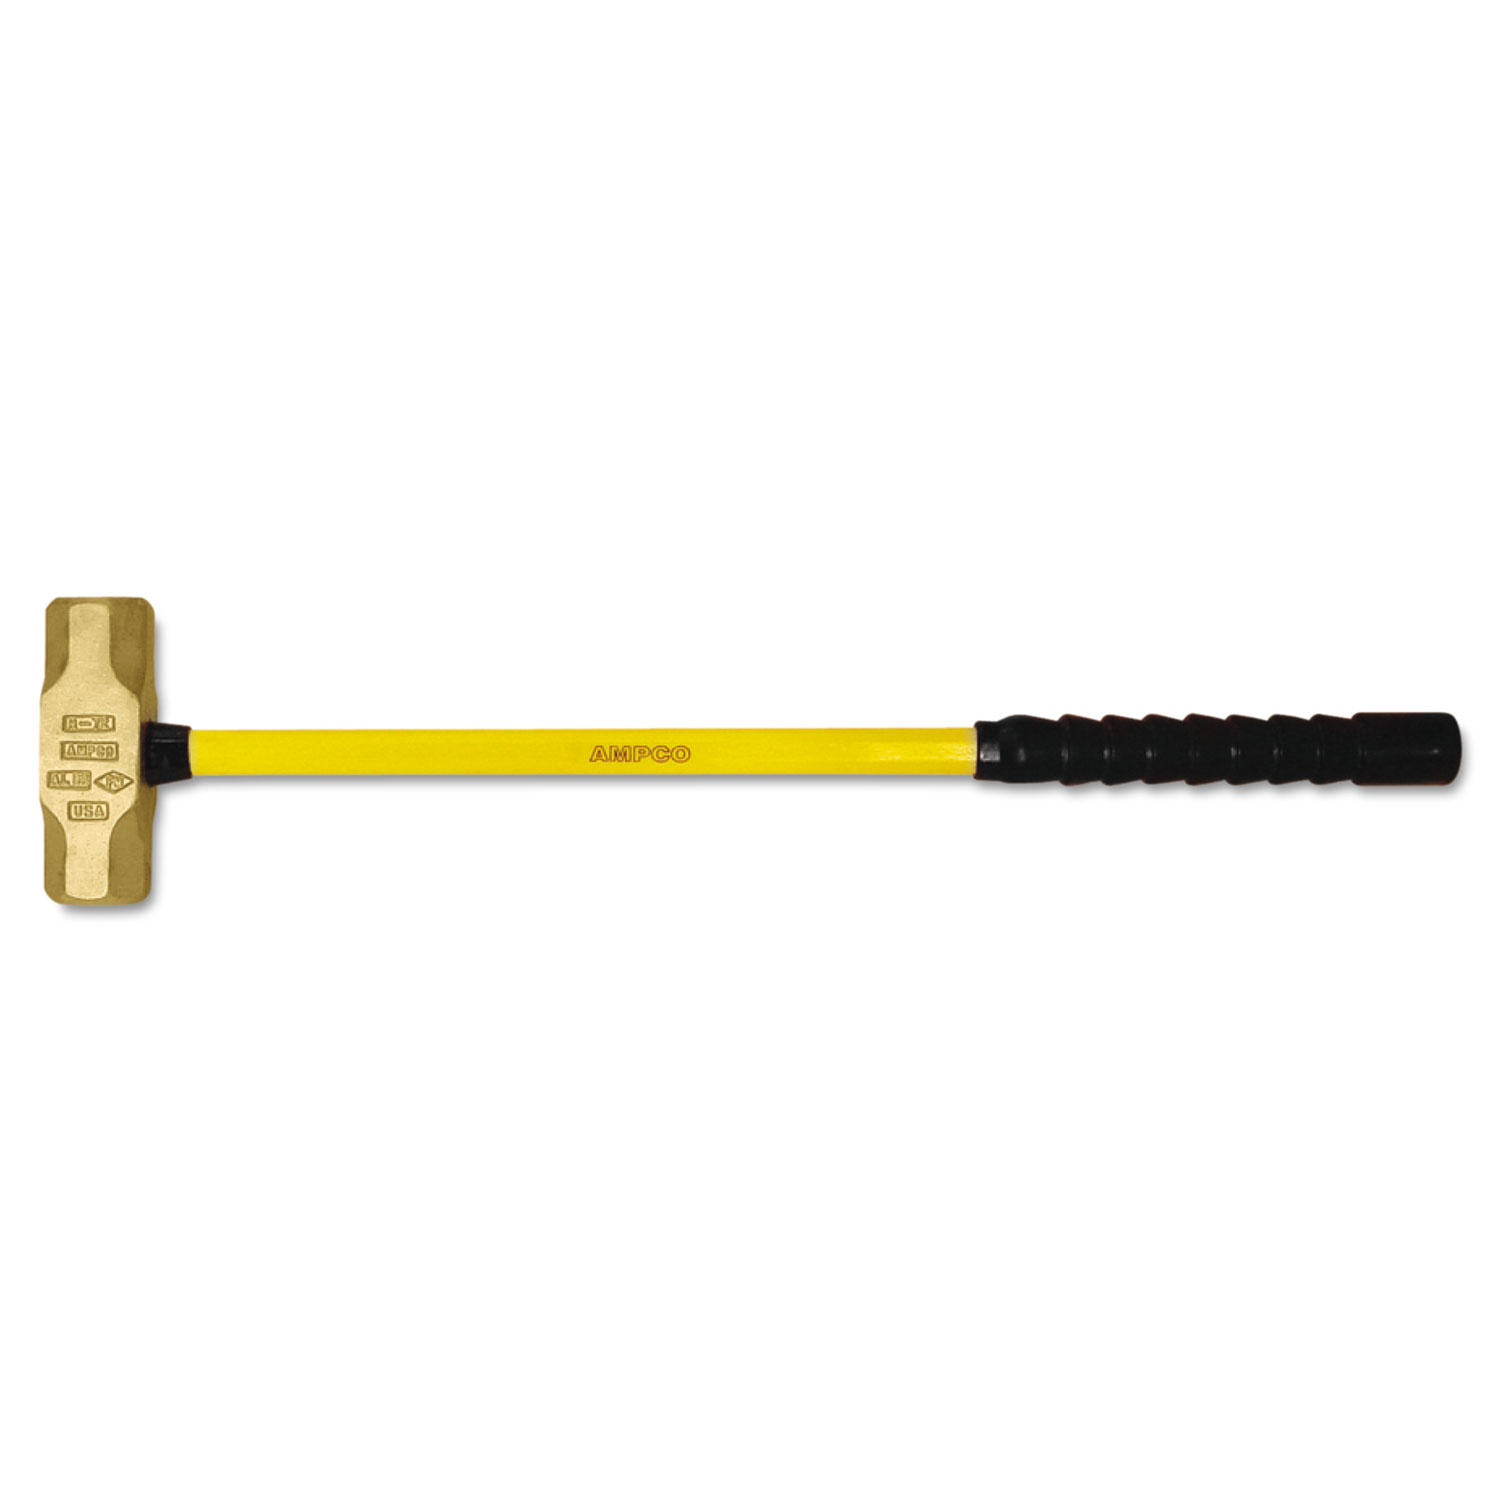 Sledge Hammer, 10lb, Fiberglass Handle